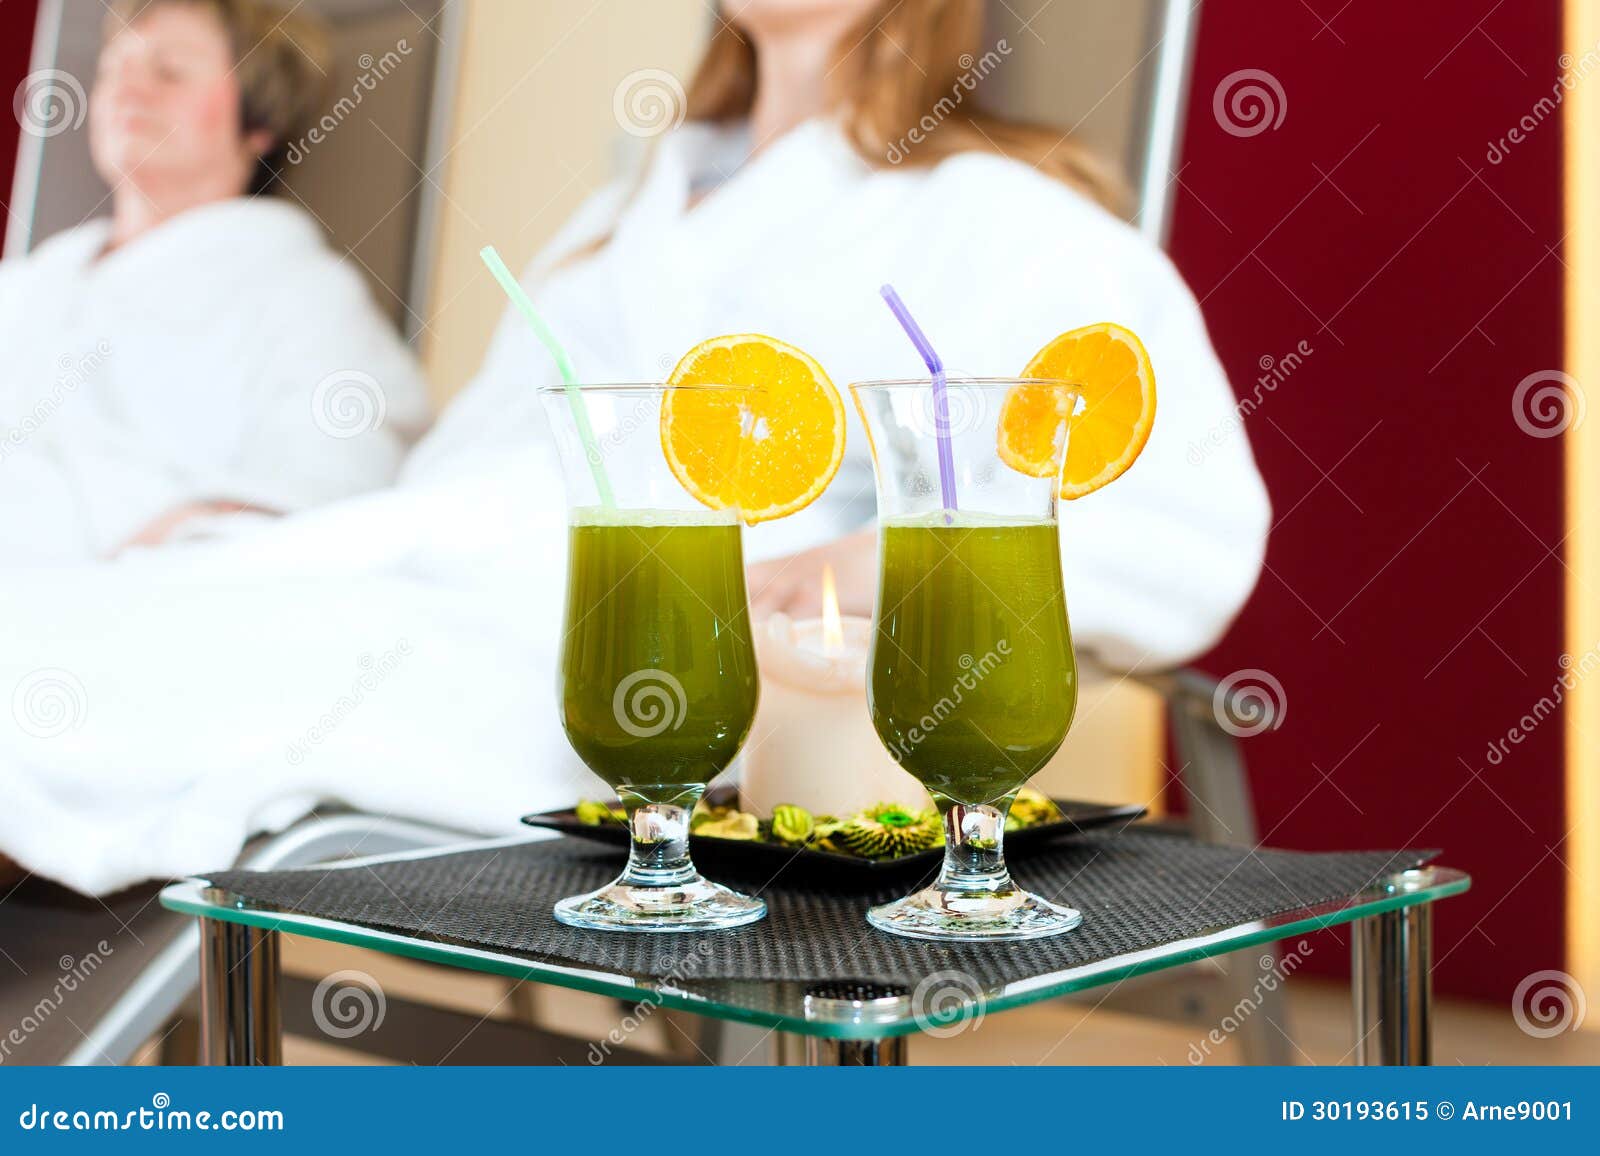 wellness - chlorophyll-shake on a table